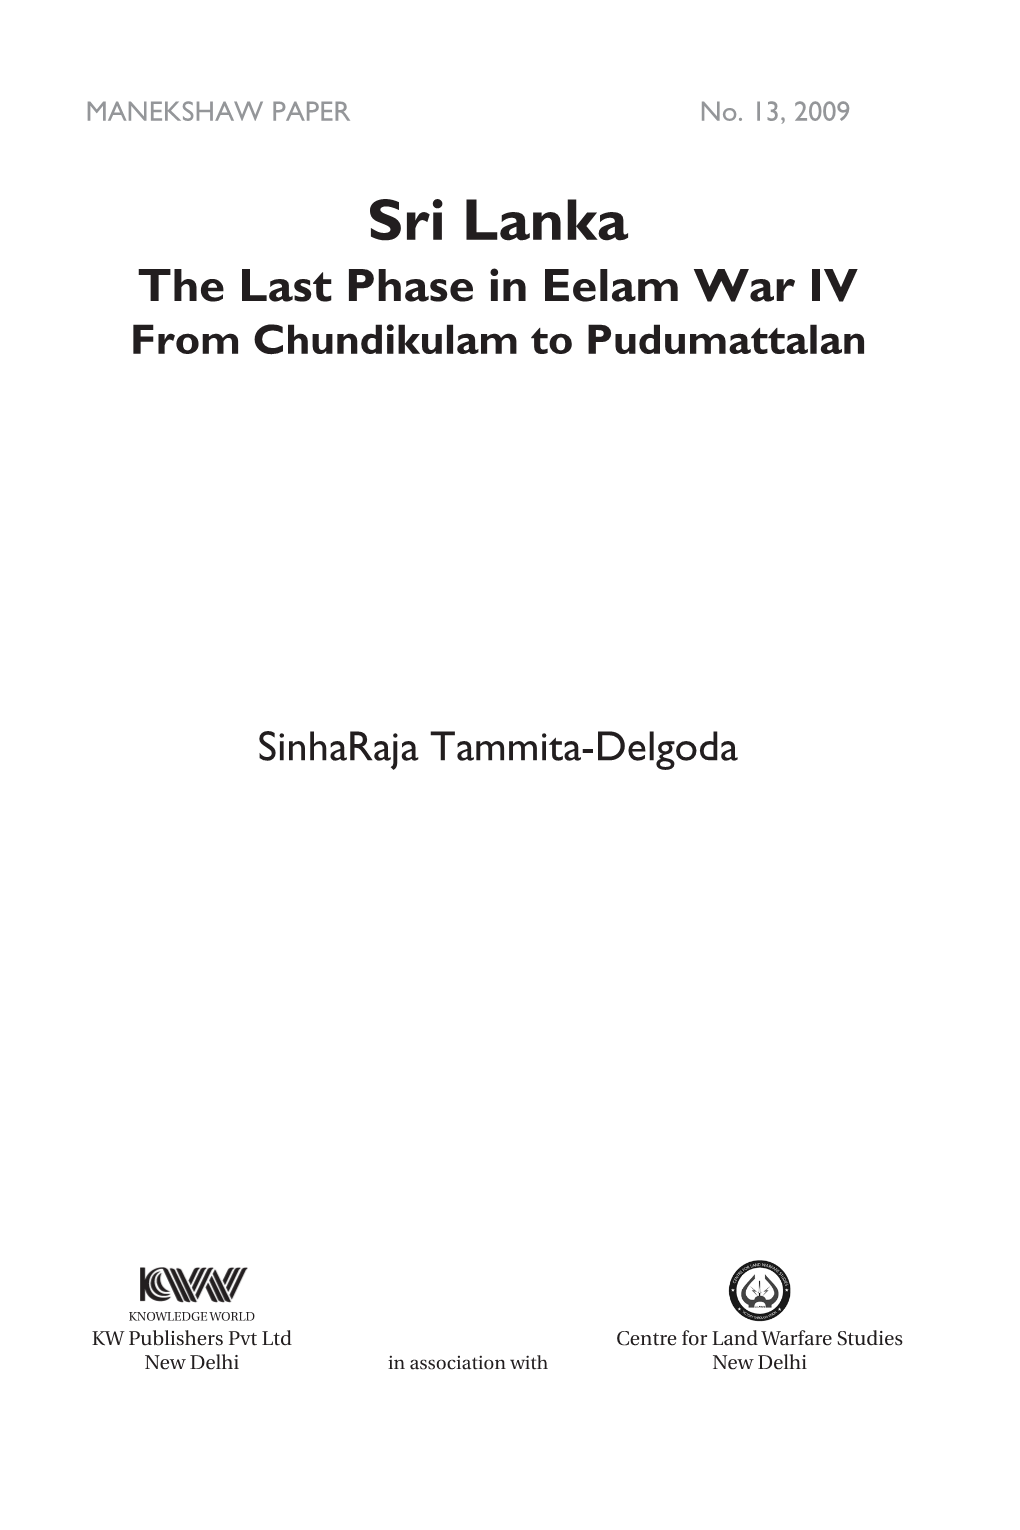 Sri Lanka the Last Phase in Eelam War IV from Chundikulam to Pudumattalan